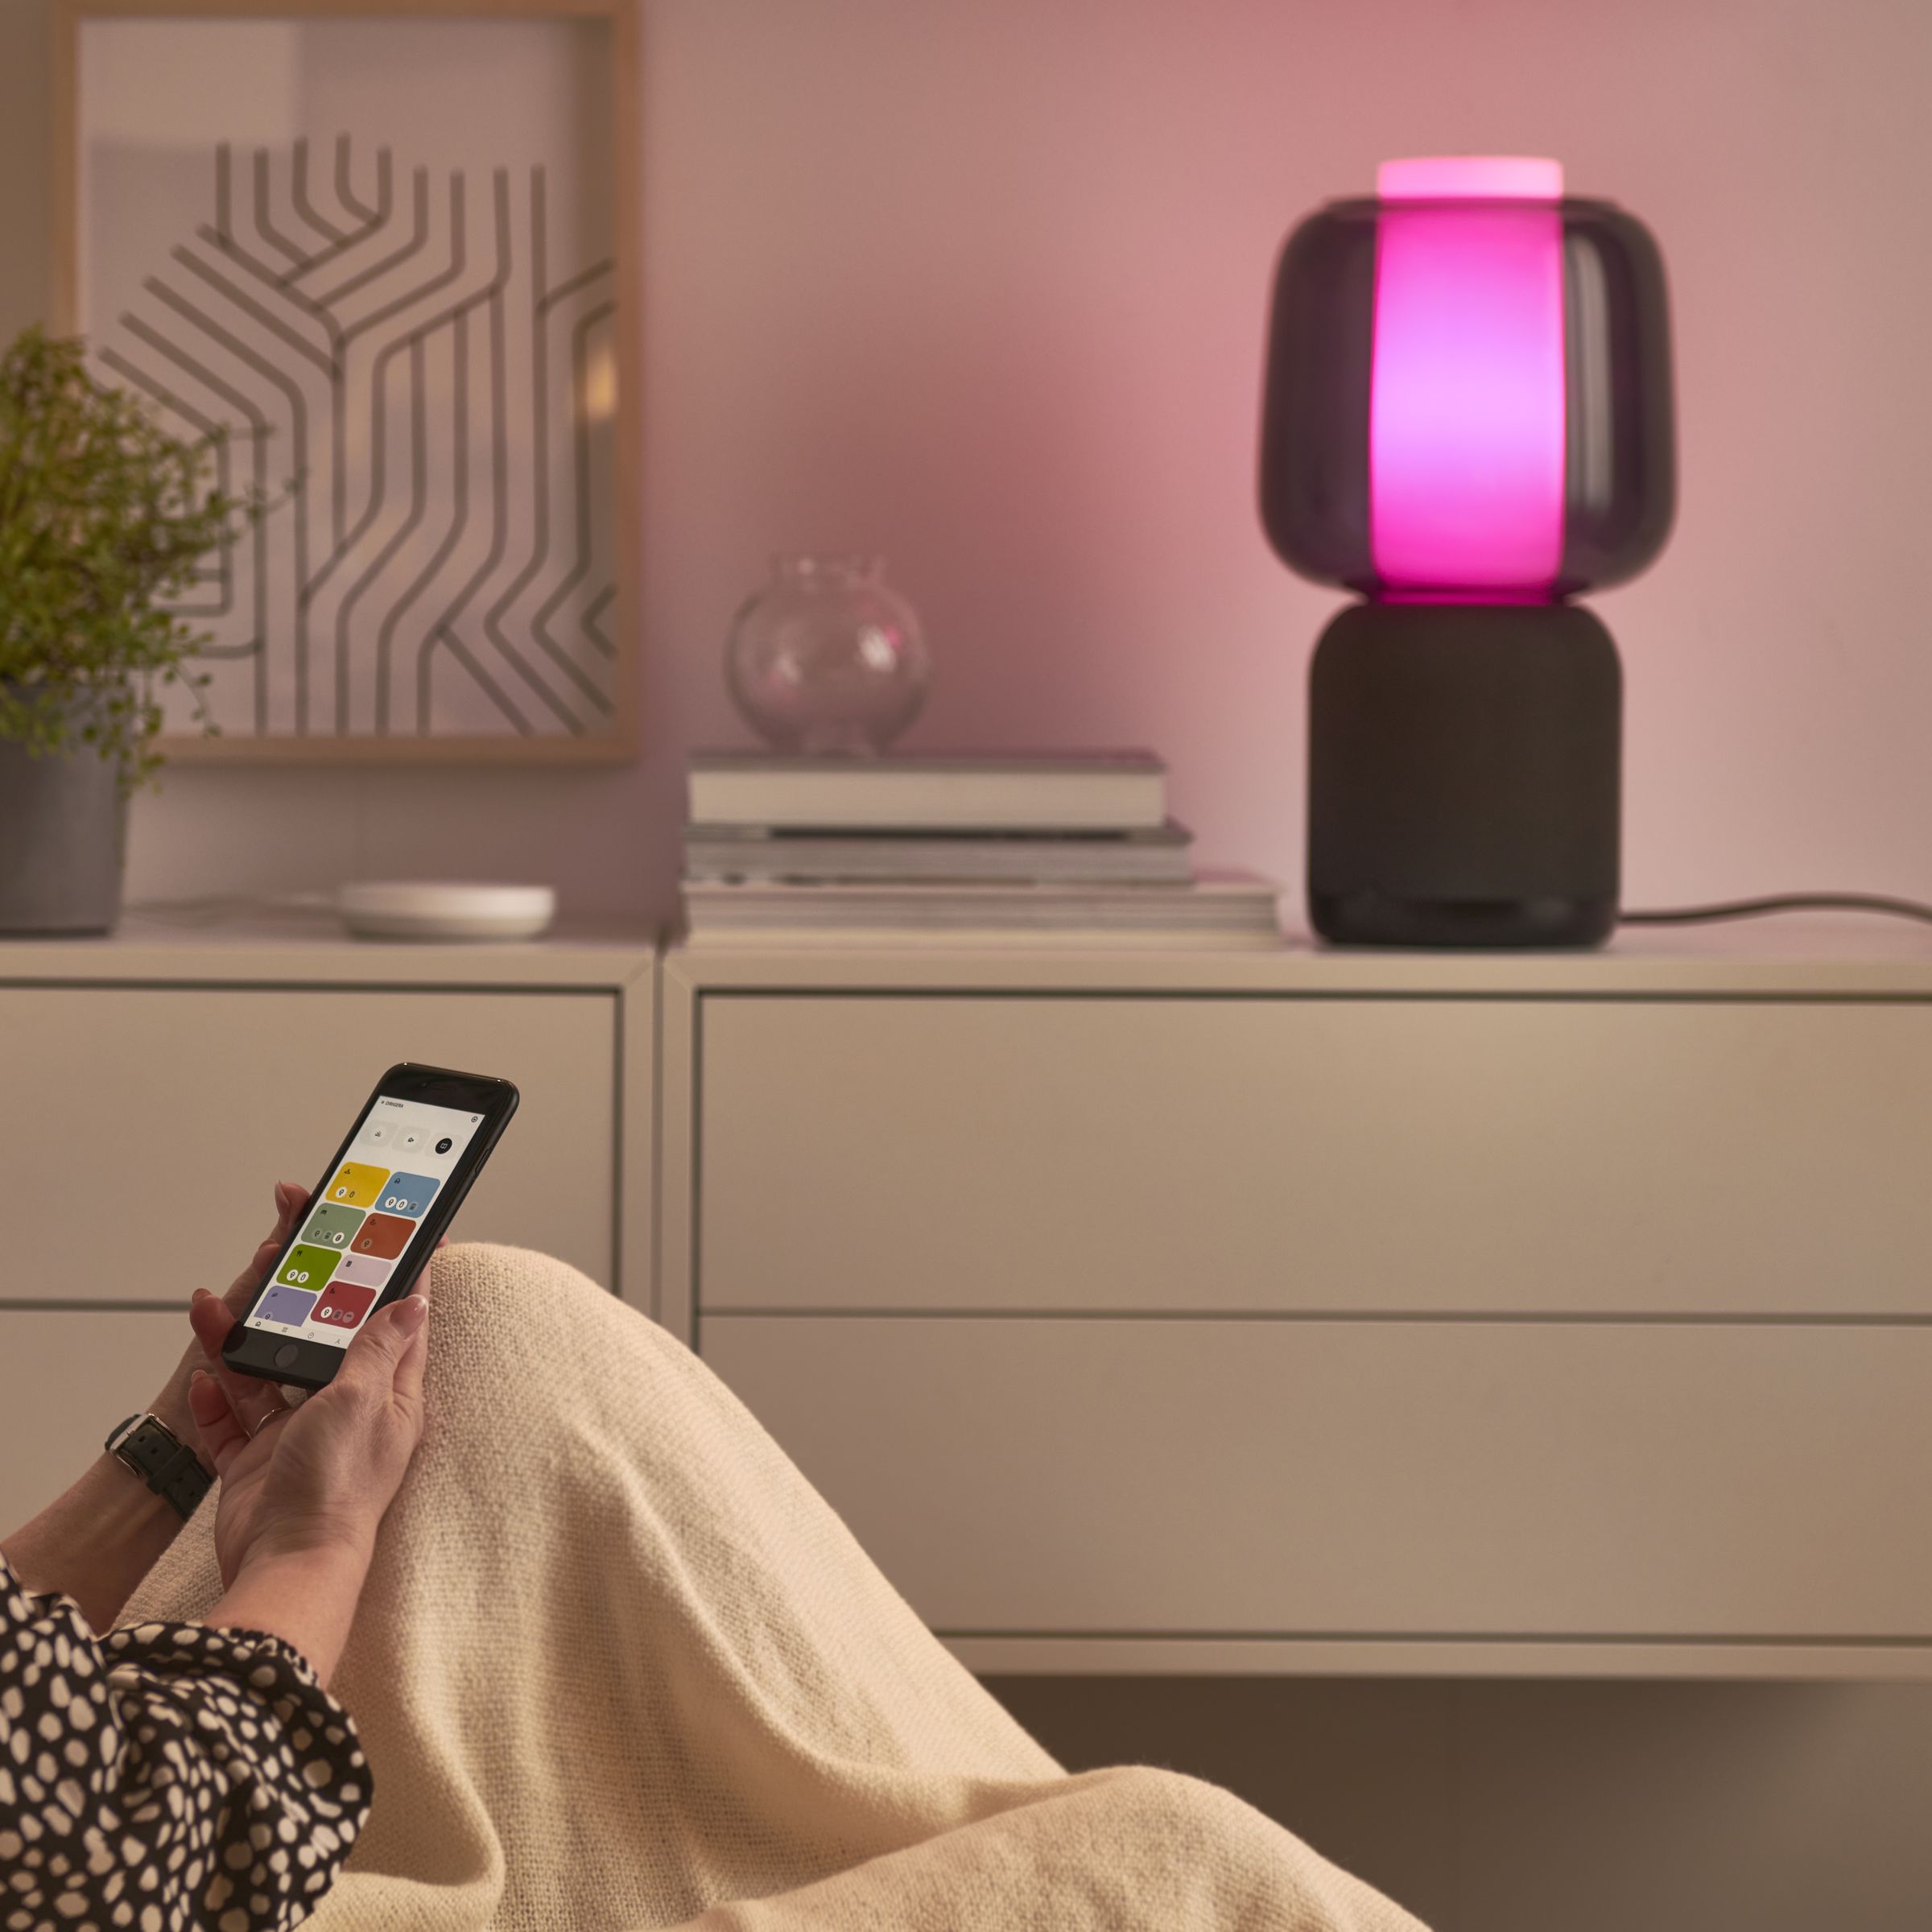 The new Home Smart app controlling a Dirigera hub in an Ikea smart home.